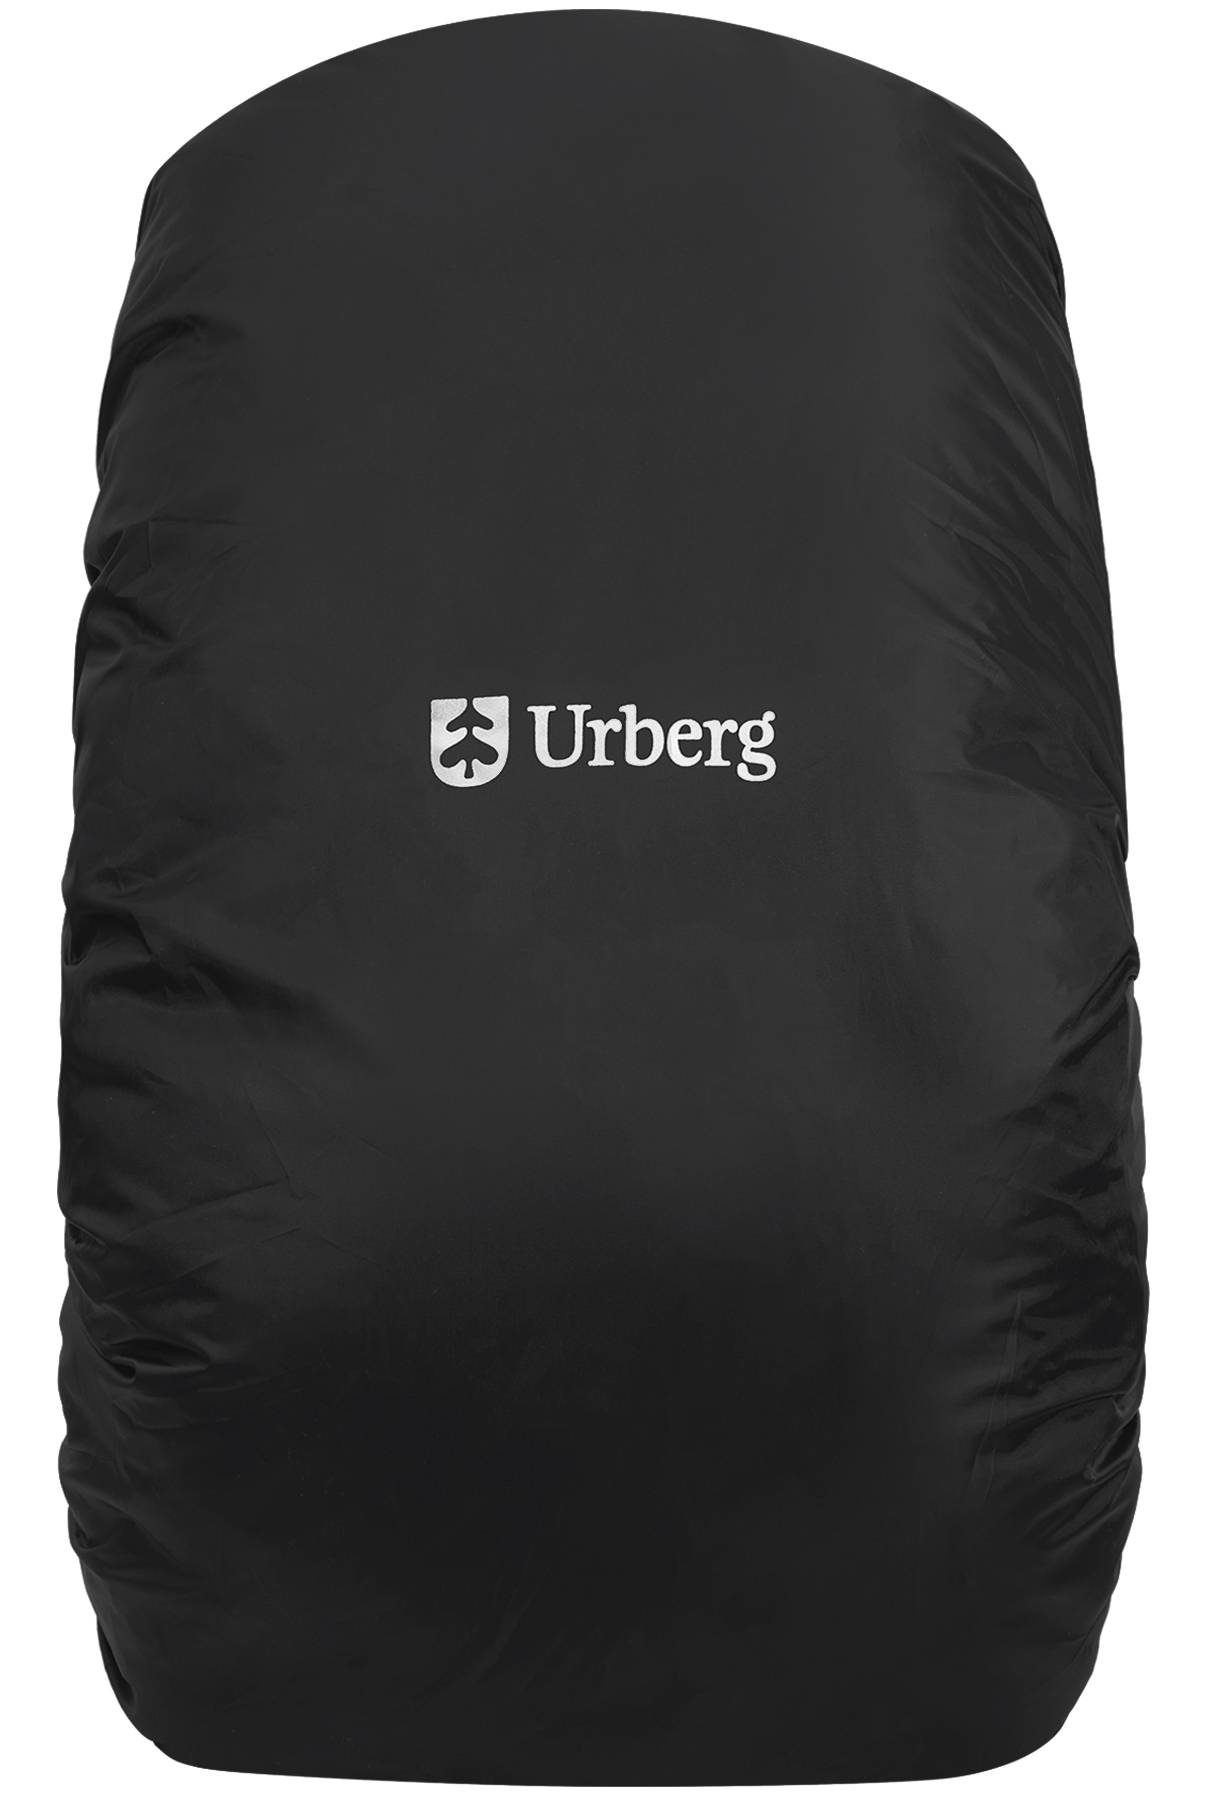 Urberg Backpack Raincover M Black